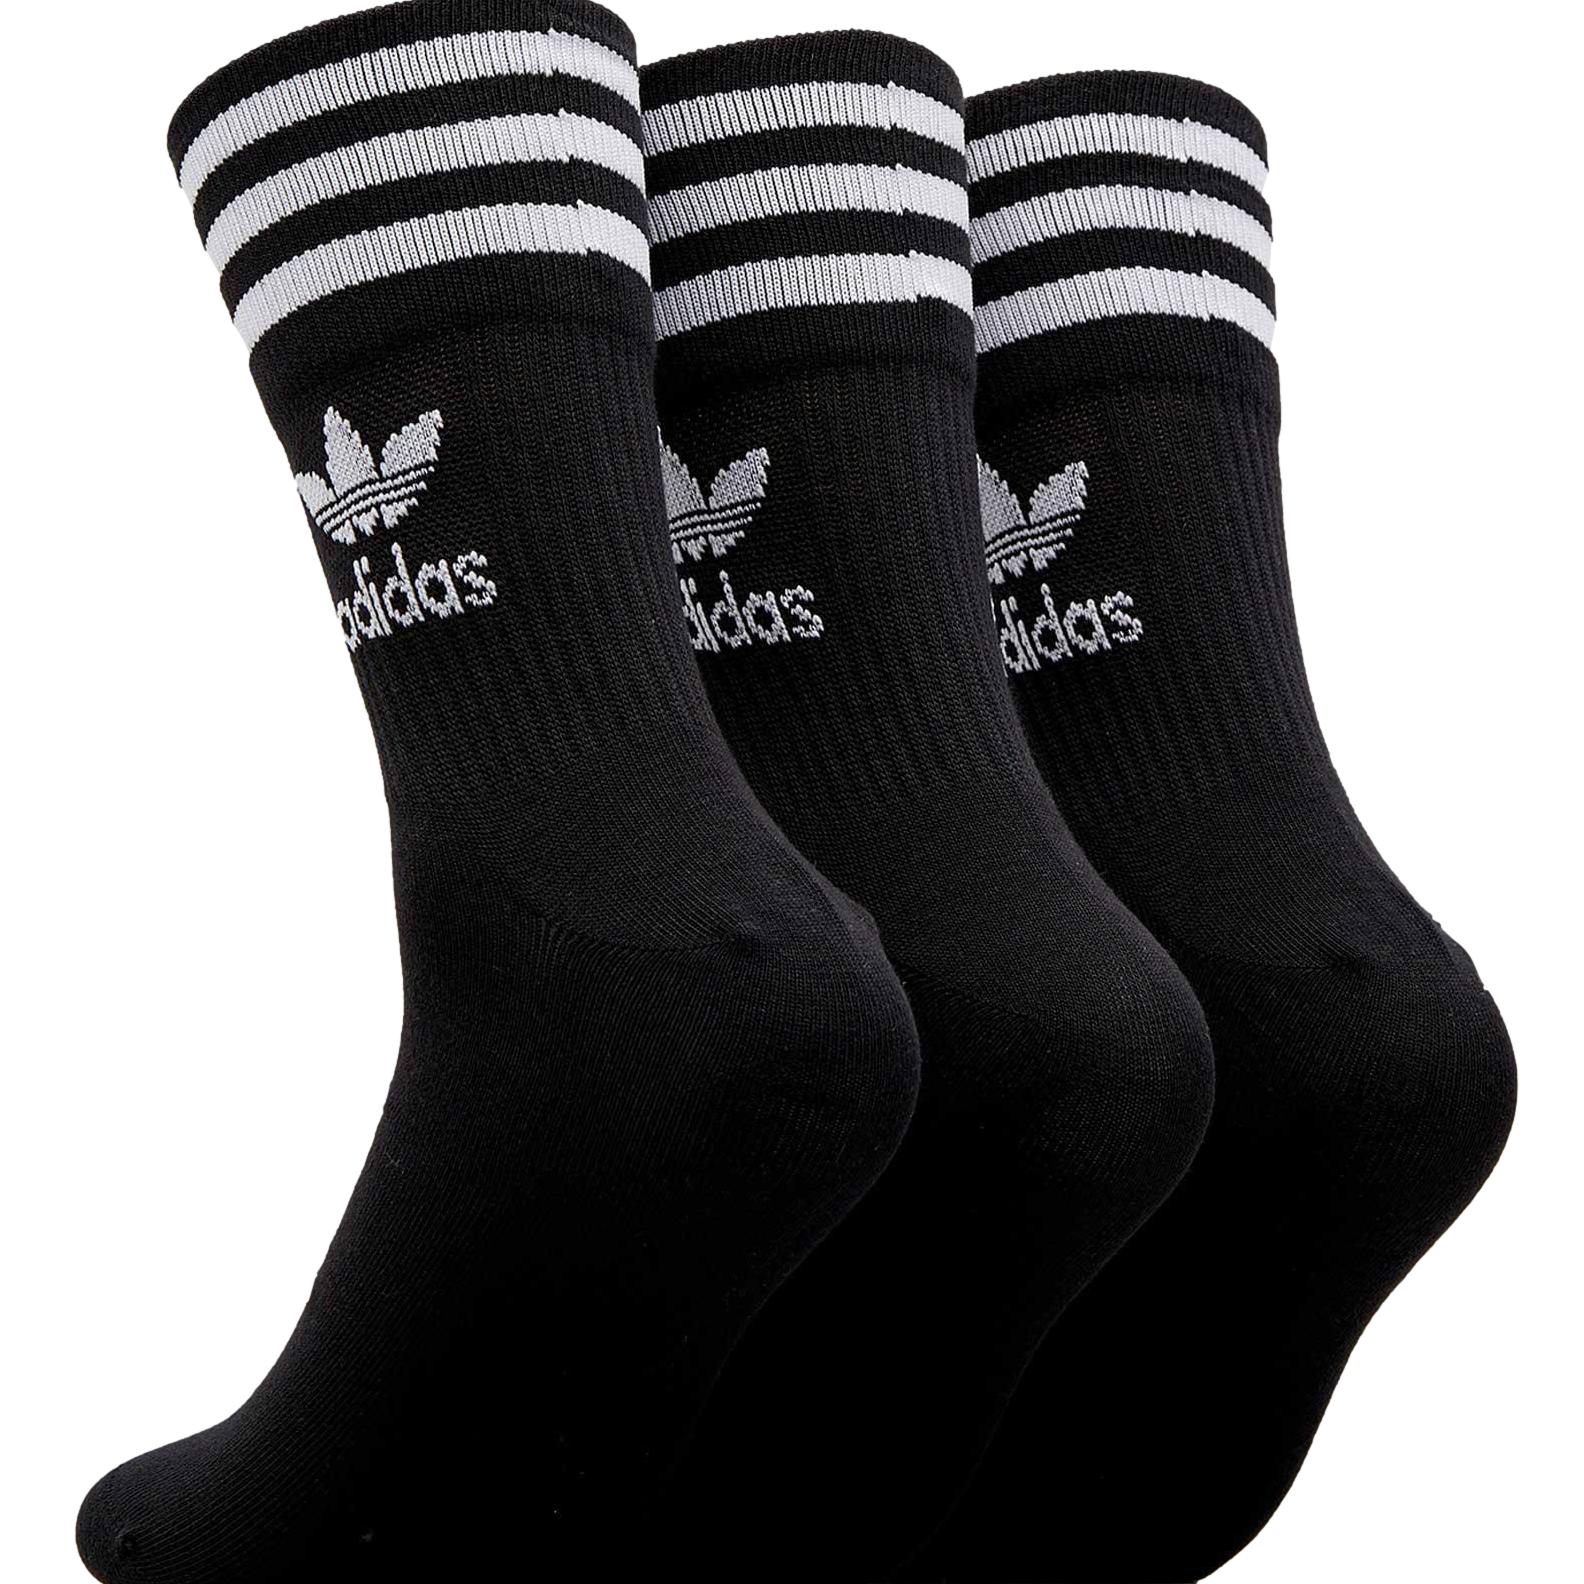 Adidas Mid Cut Crew Sock Black / White